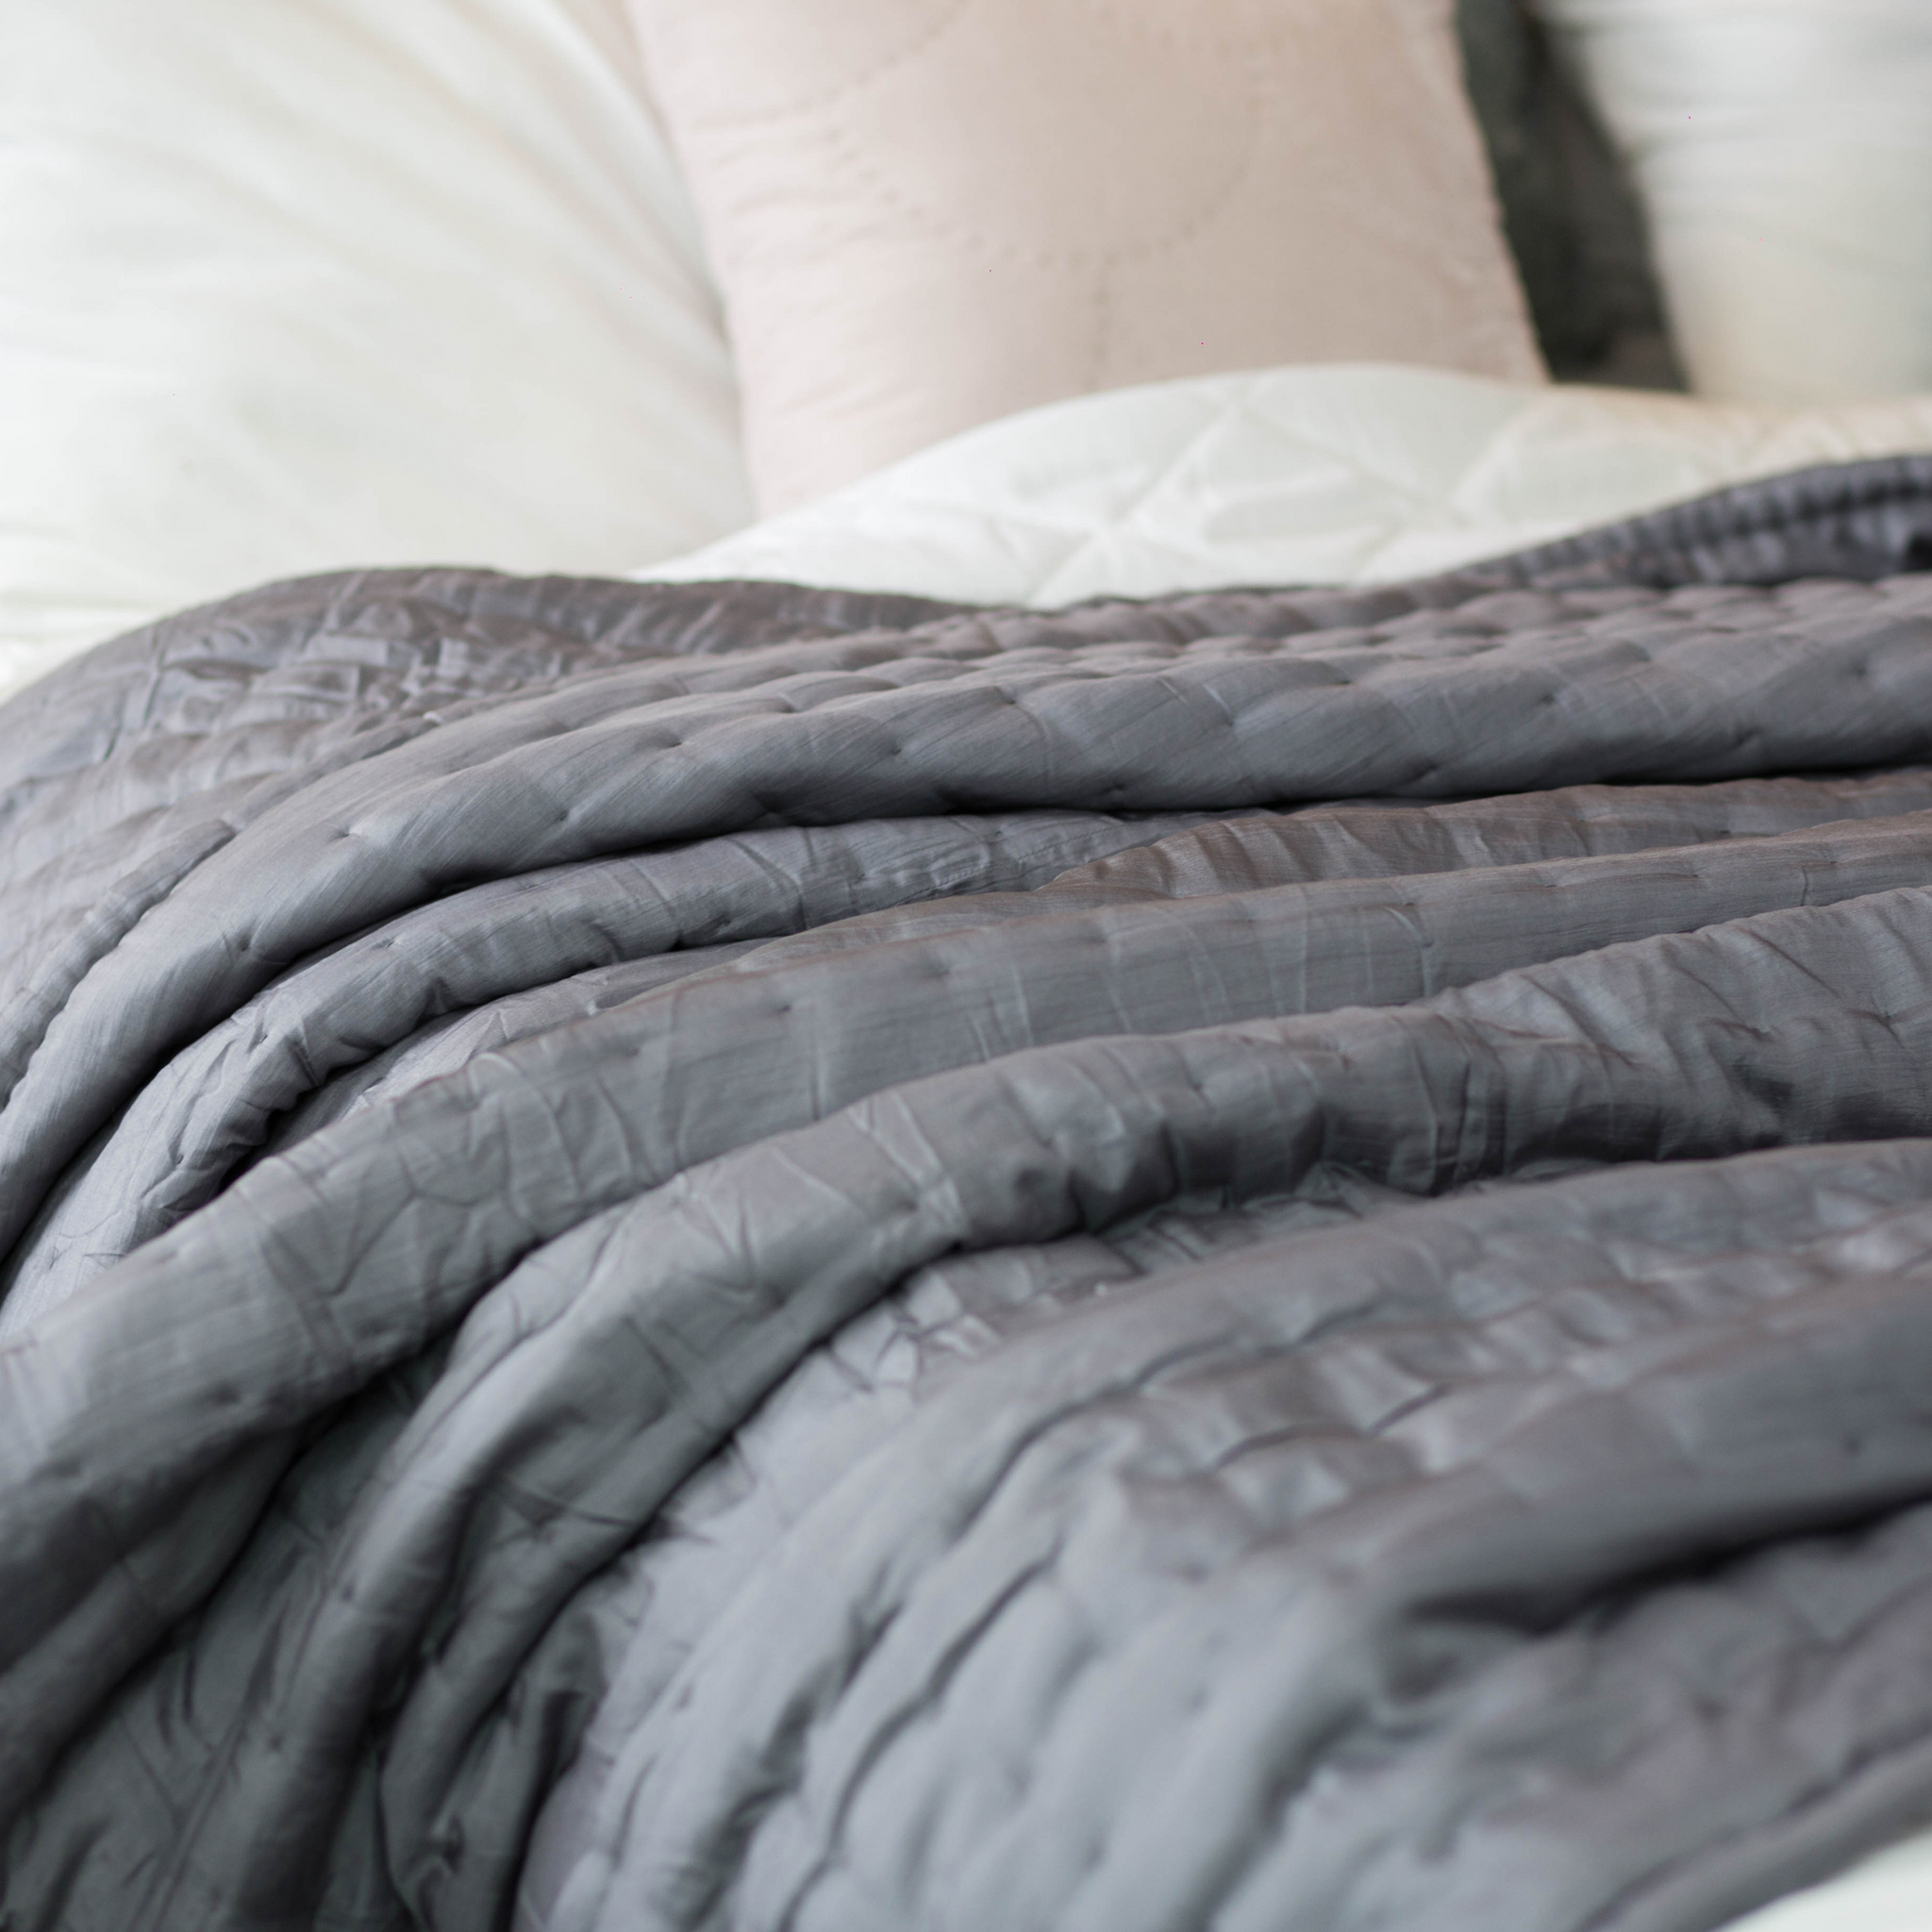 Mulberry Silk Bedding Set- Gray Blanket & Shams - Box Hand Stitched by artisans